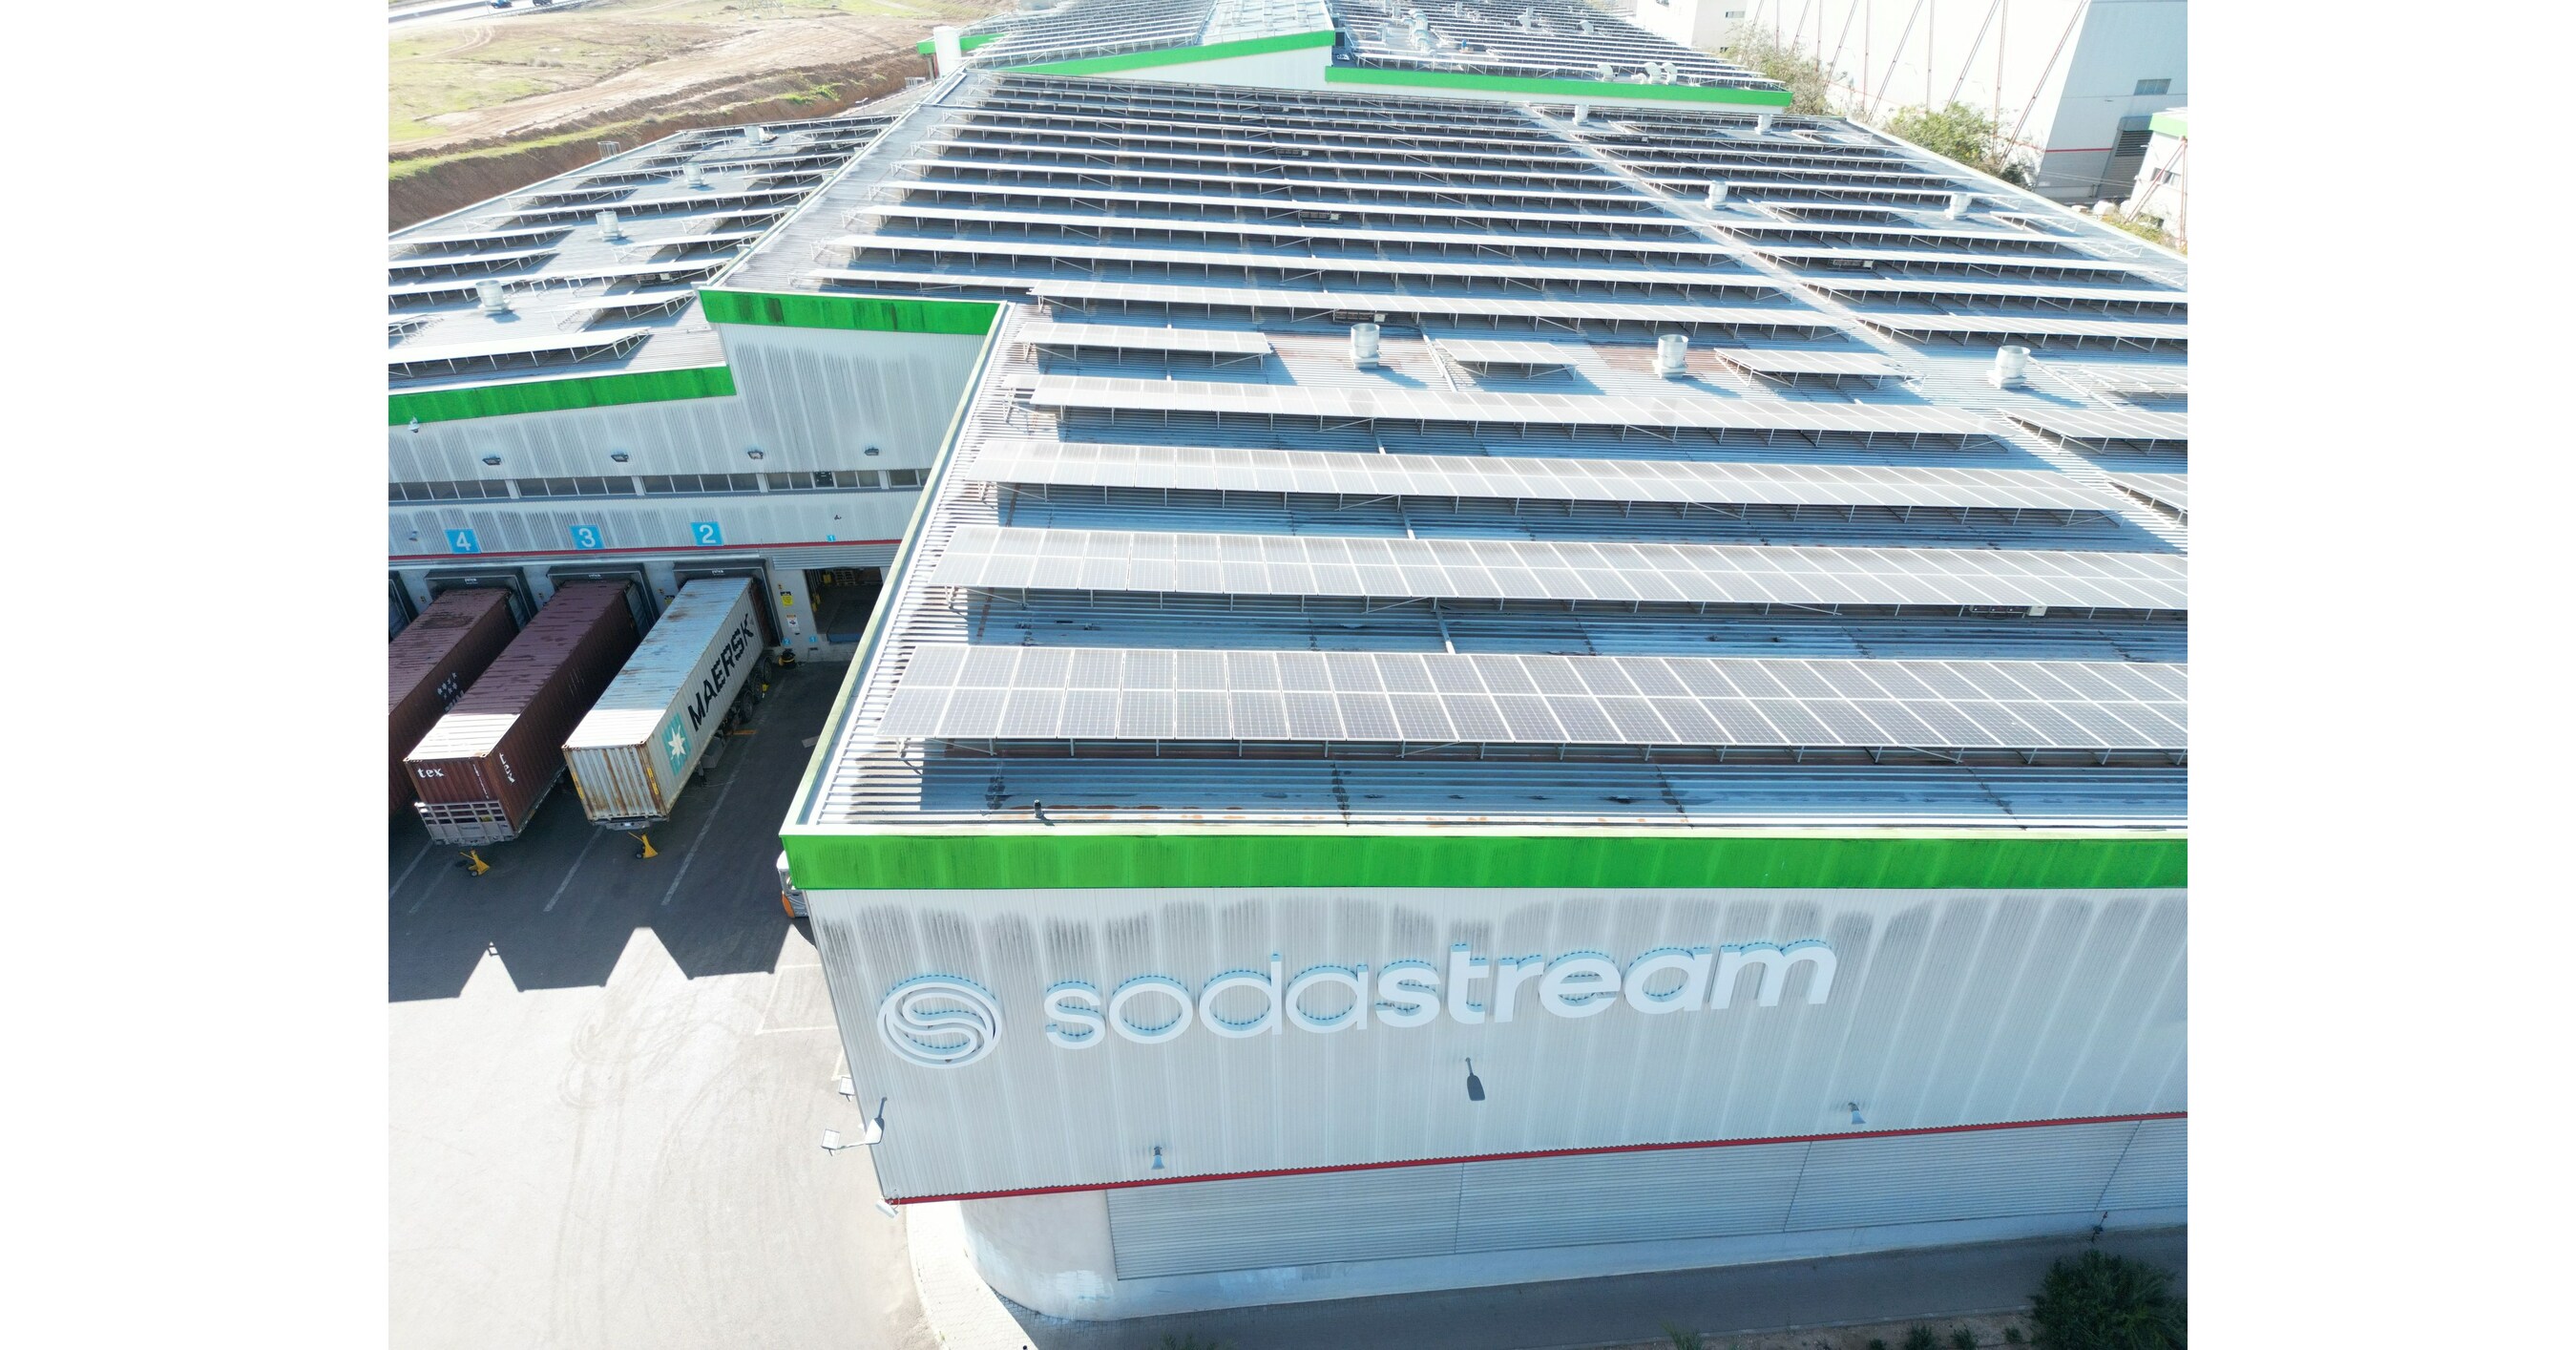 SodaStream Announces New Direct to Consumer CO2 Subscription Program